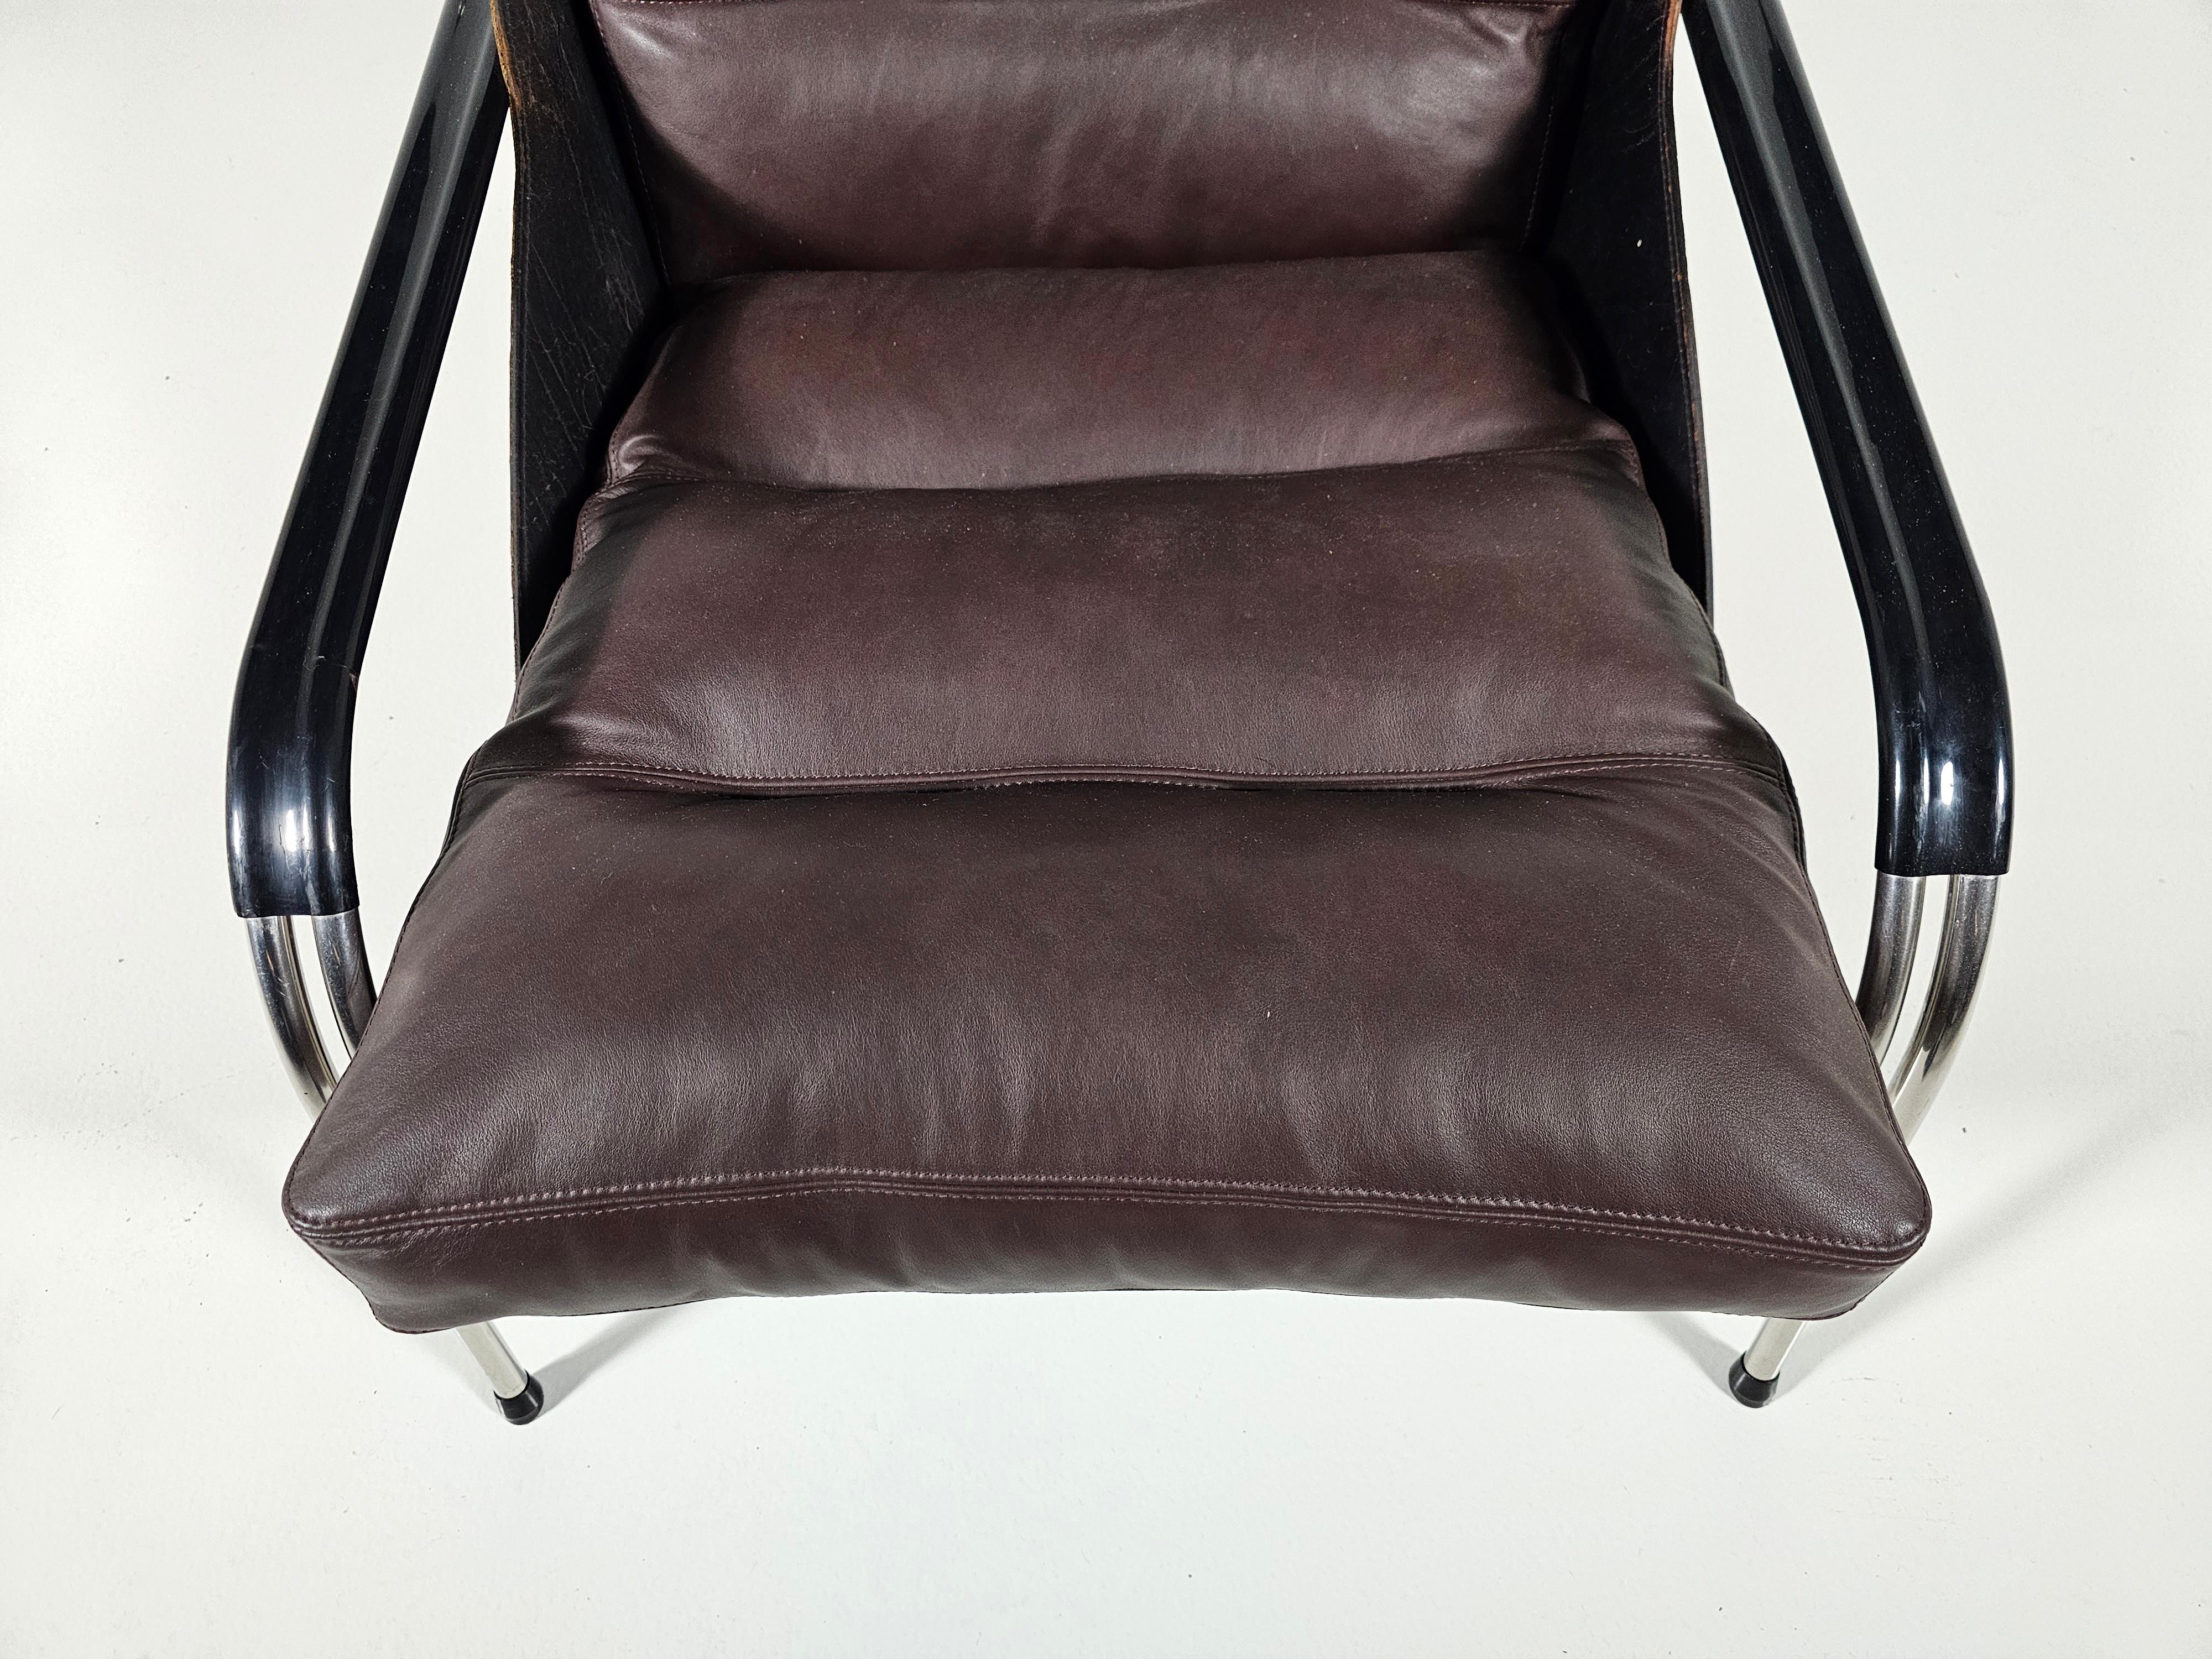  Marco Zanuso Maggiolina lounge chairs in brown and black leather, Zanotta, 1950 For Sale 3